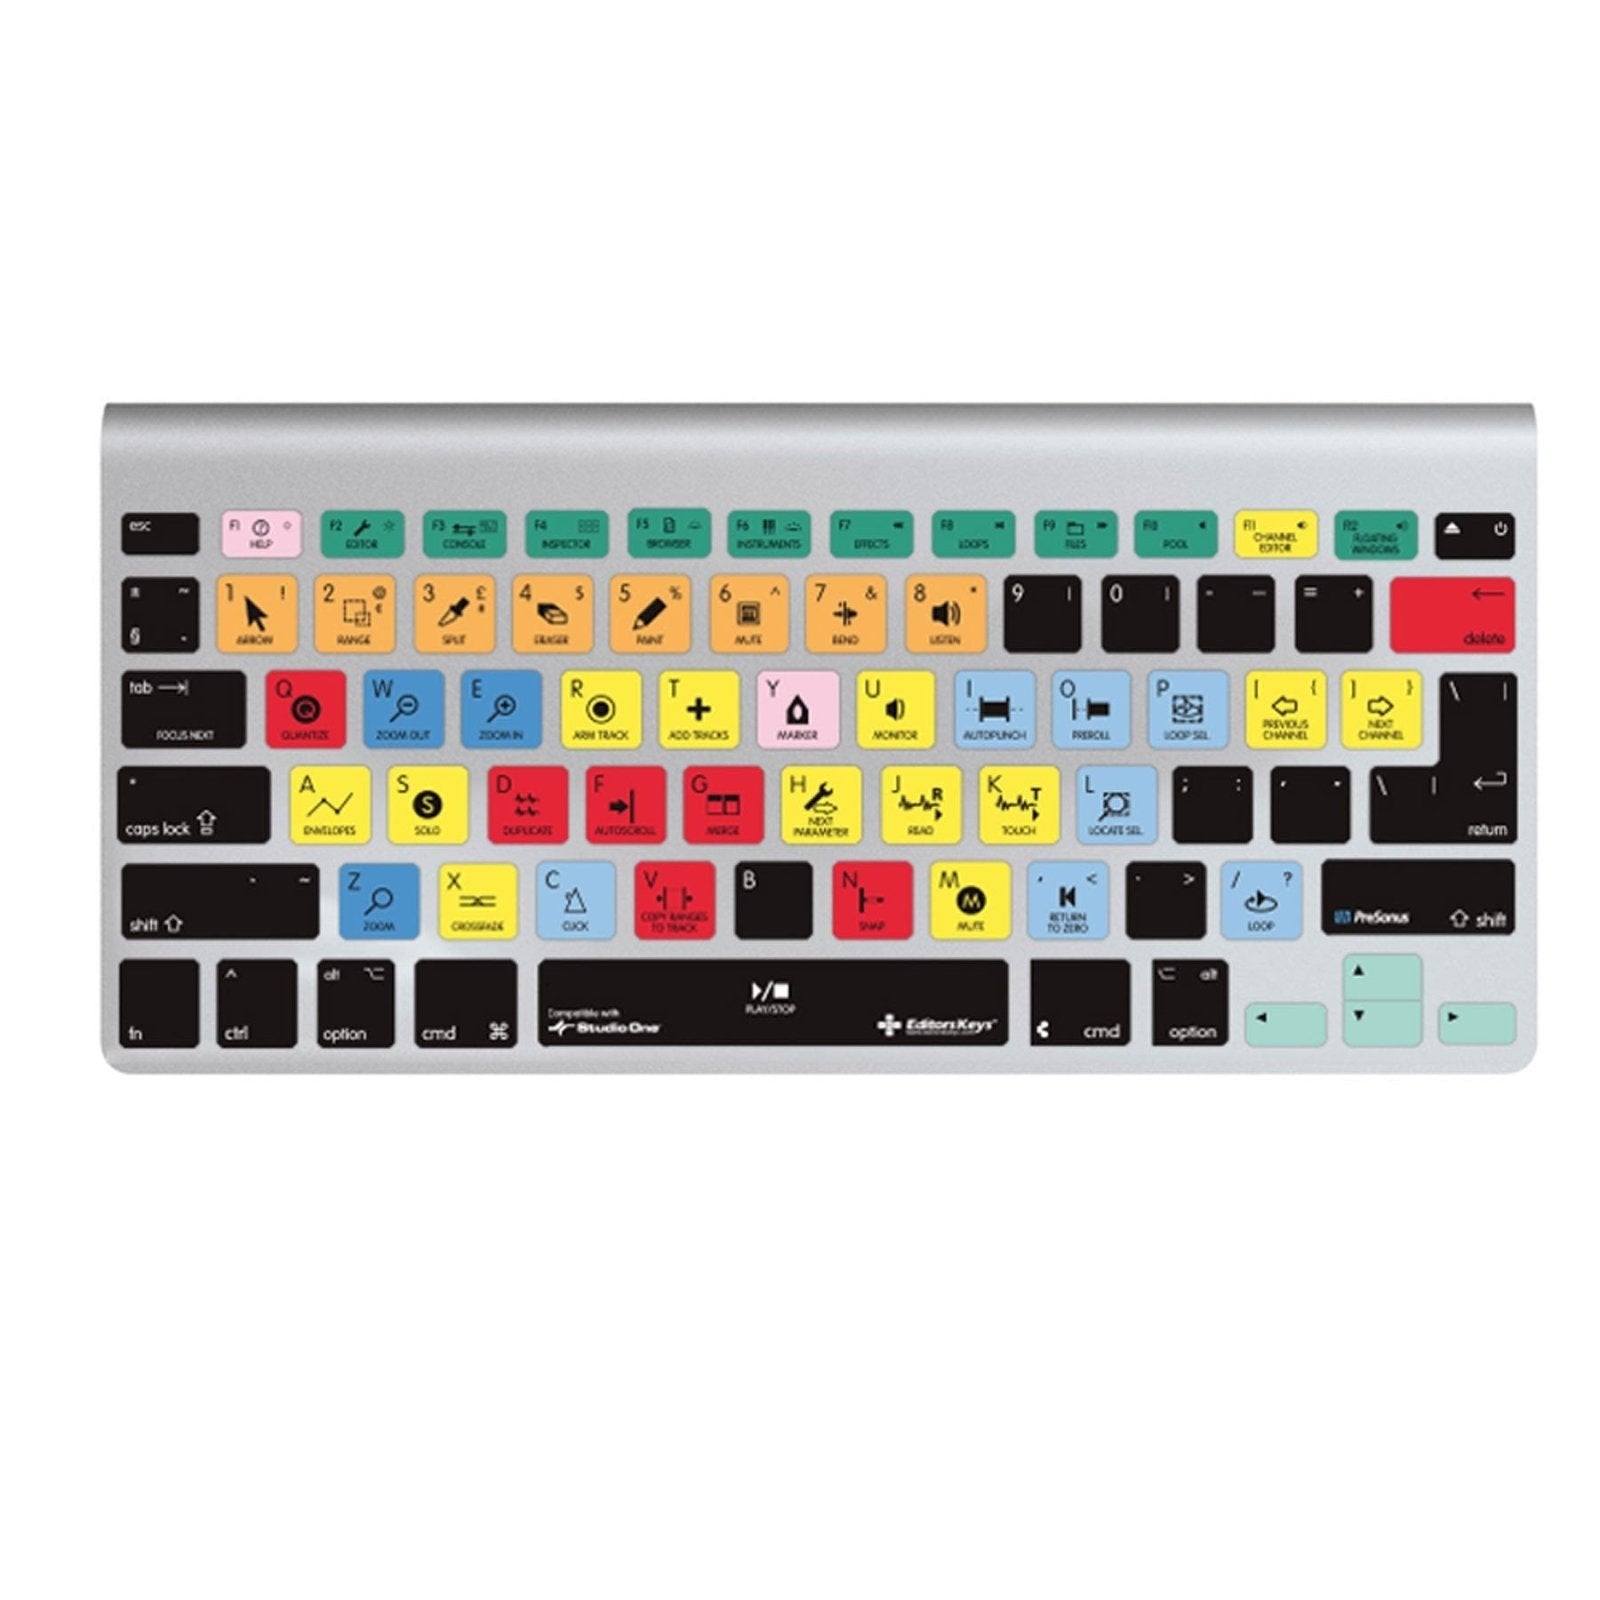 Presonus Studio One Keyboard Covers for MacBook and iMac